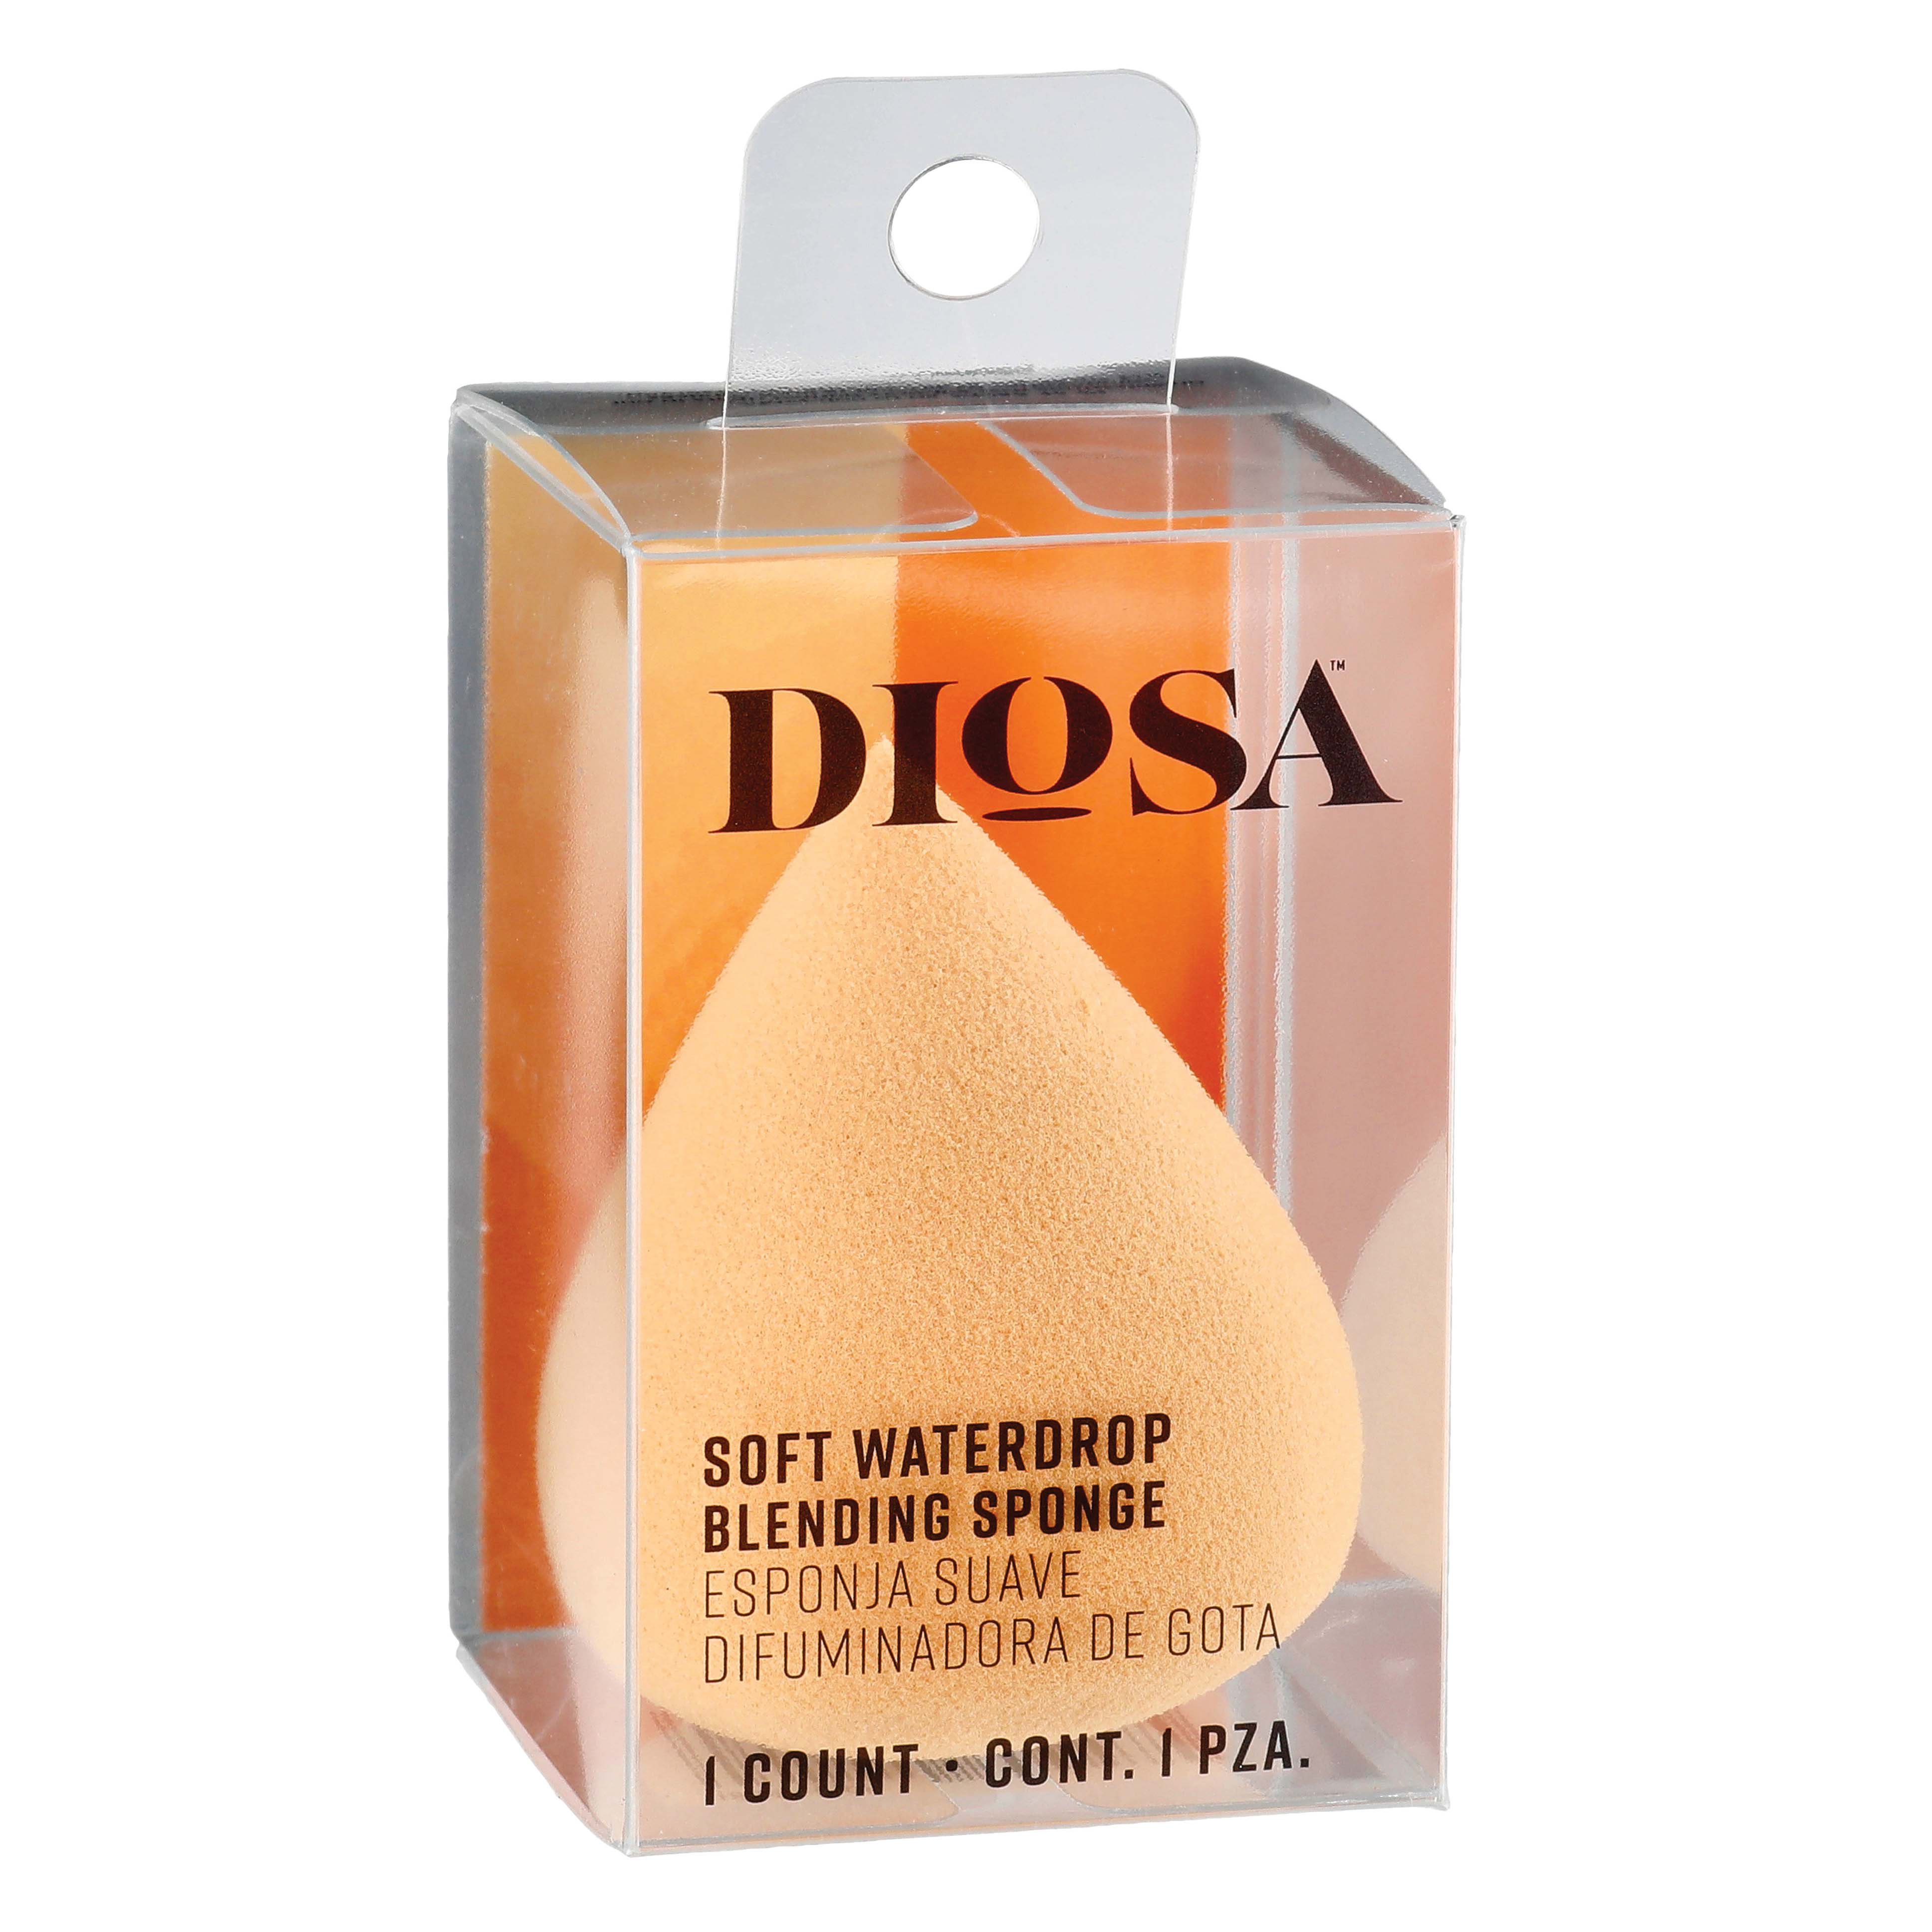 Diosa Soft Waterdrop Blending Sponge